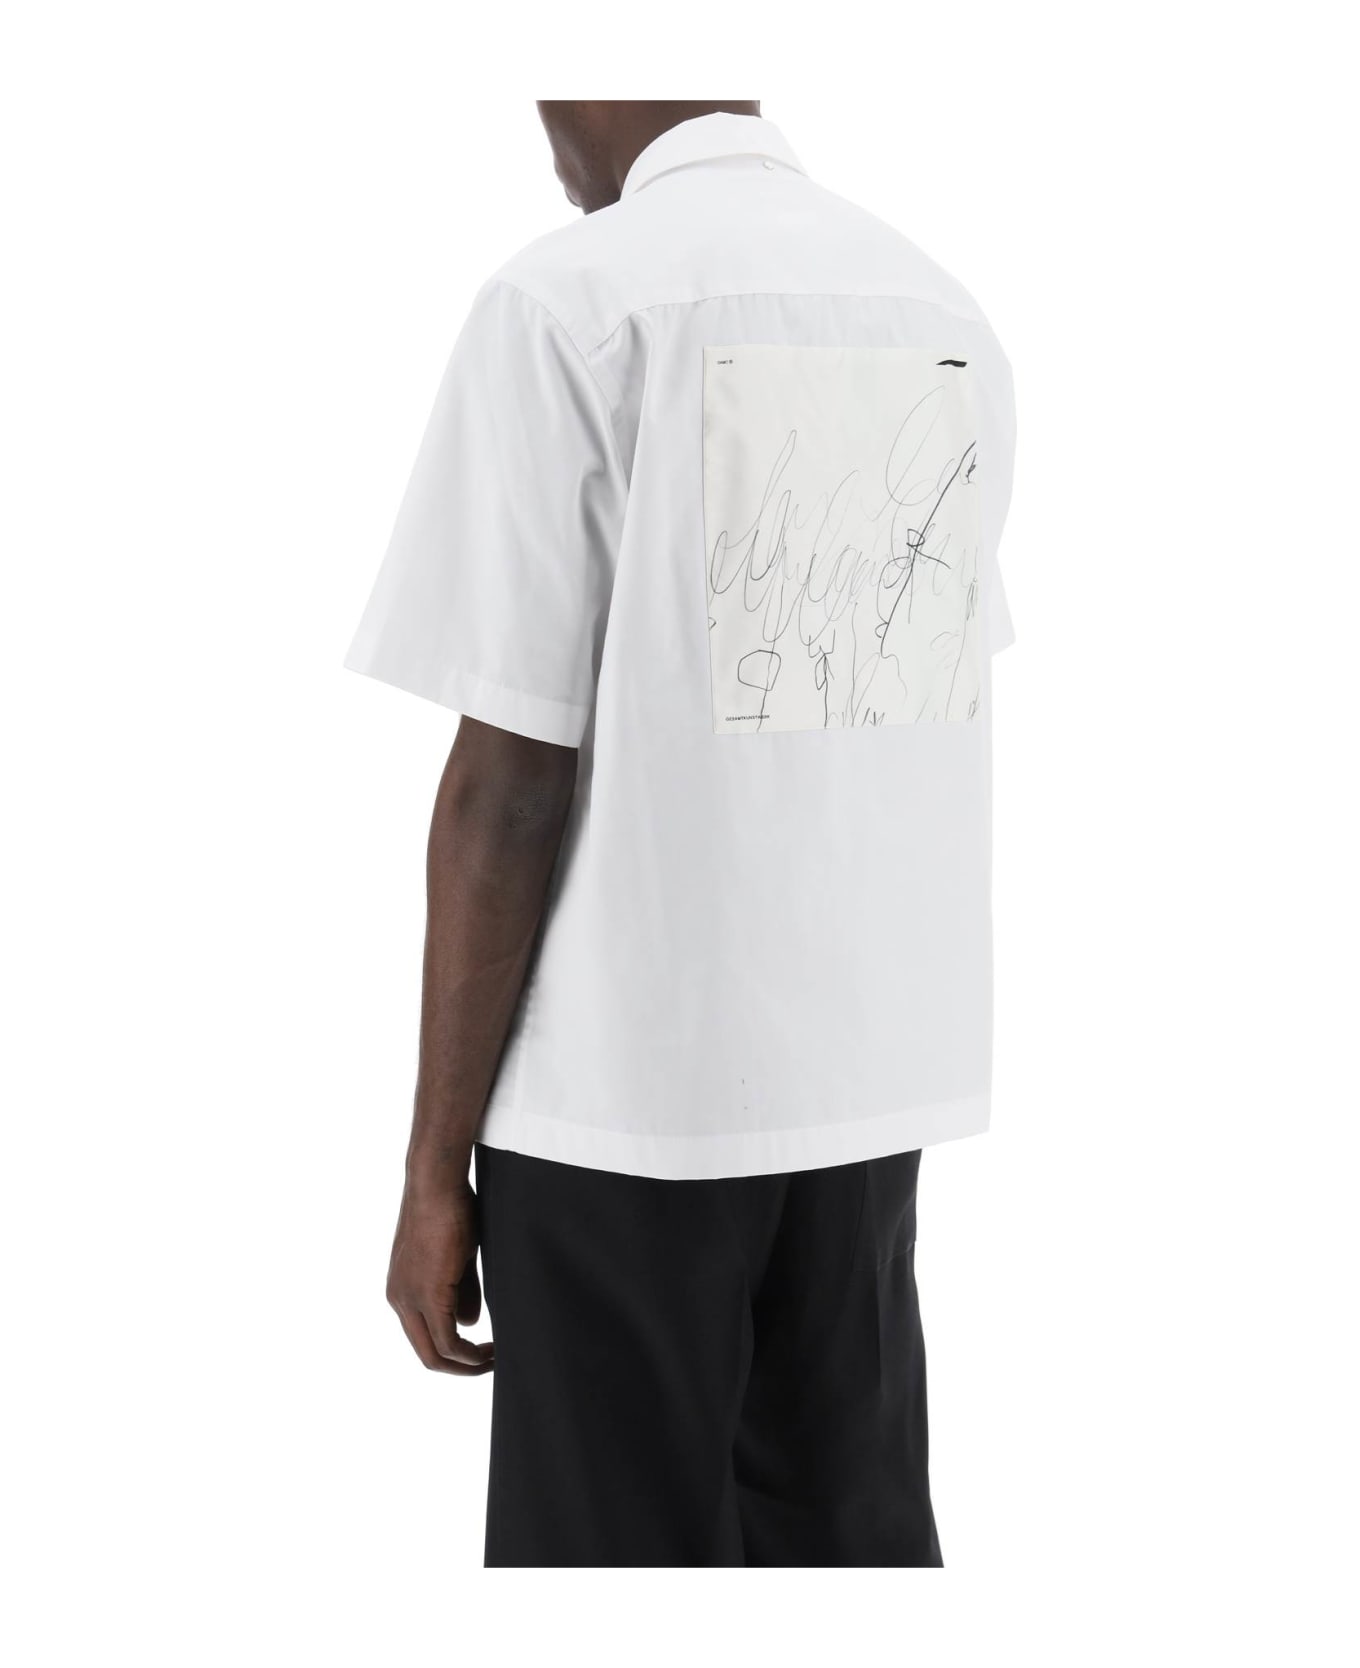 OAMC Kurt Bowling Shirt - WHITE (White)